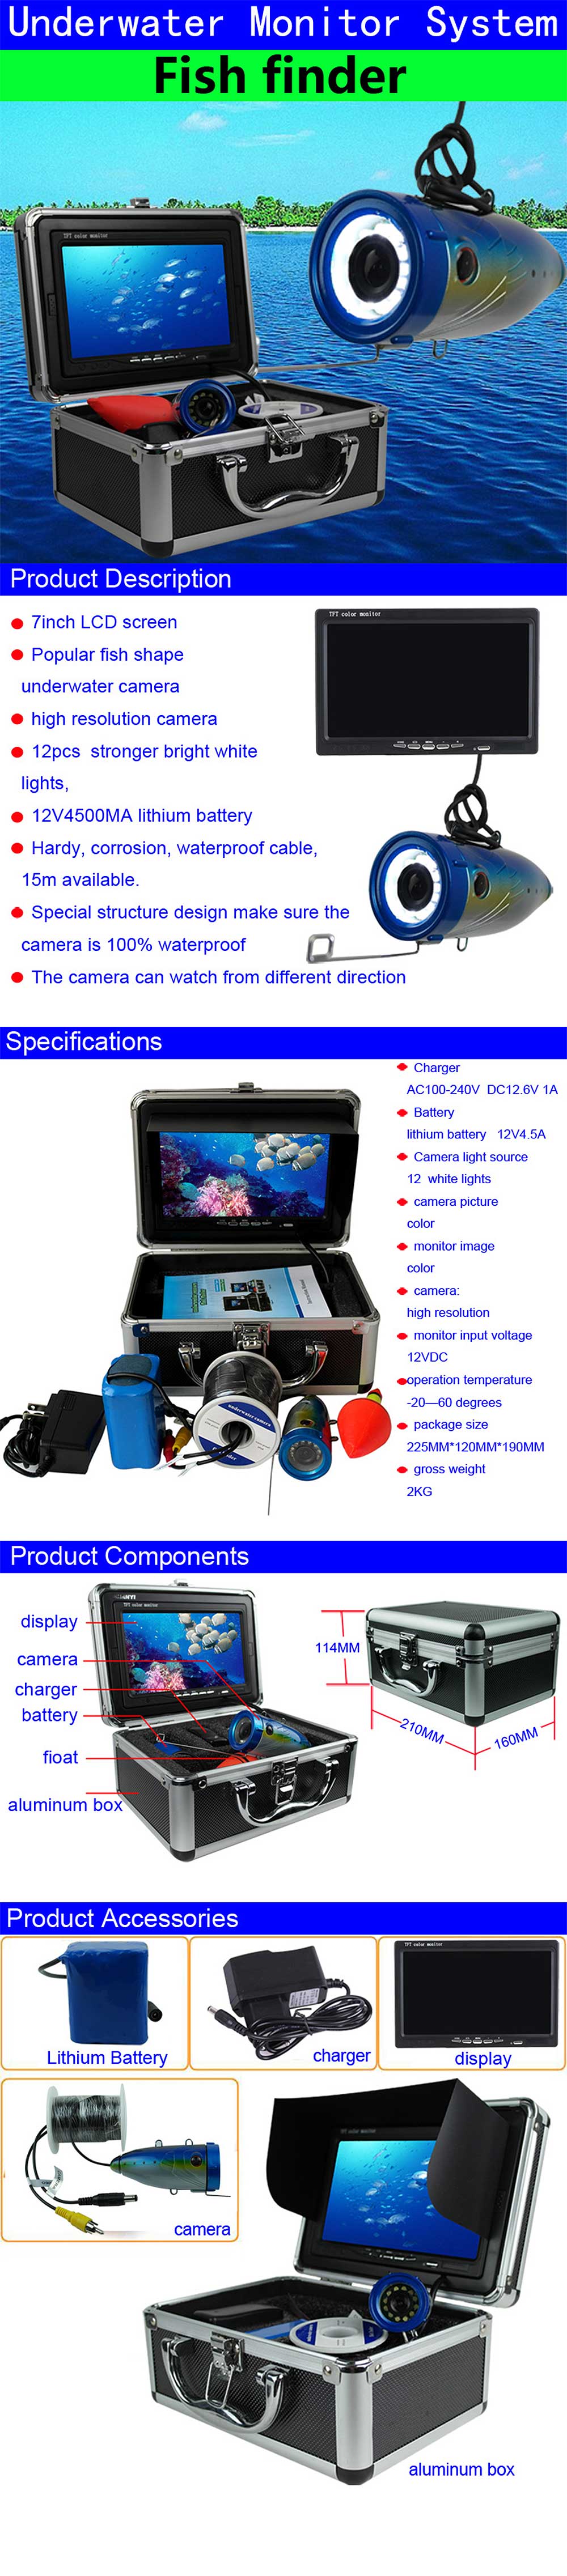 7inch 1000TVL Underwater Fishing Camera 4500mA Battery LCD Screen 12PCS Bright White Lights Fishing Finder Monitor